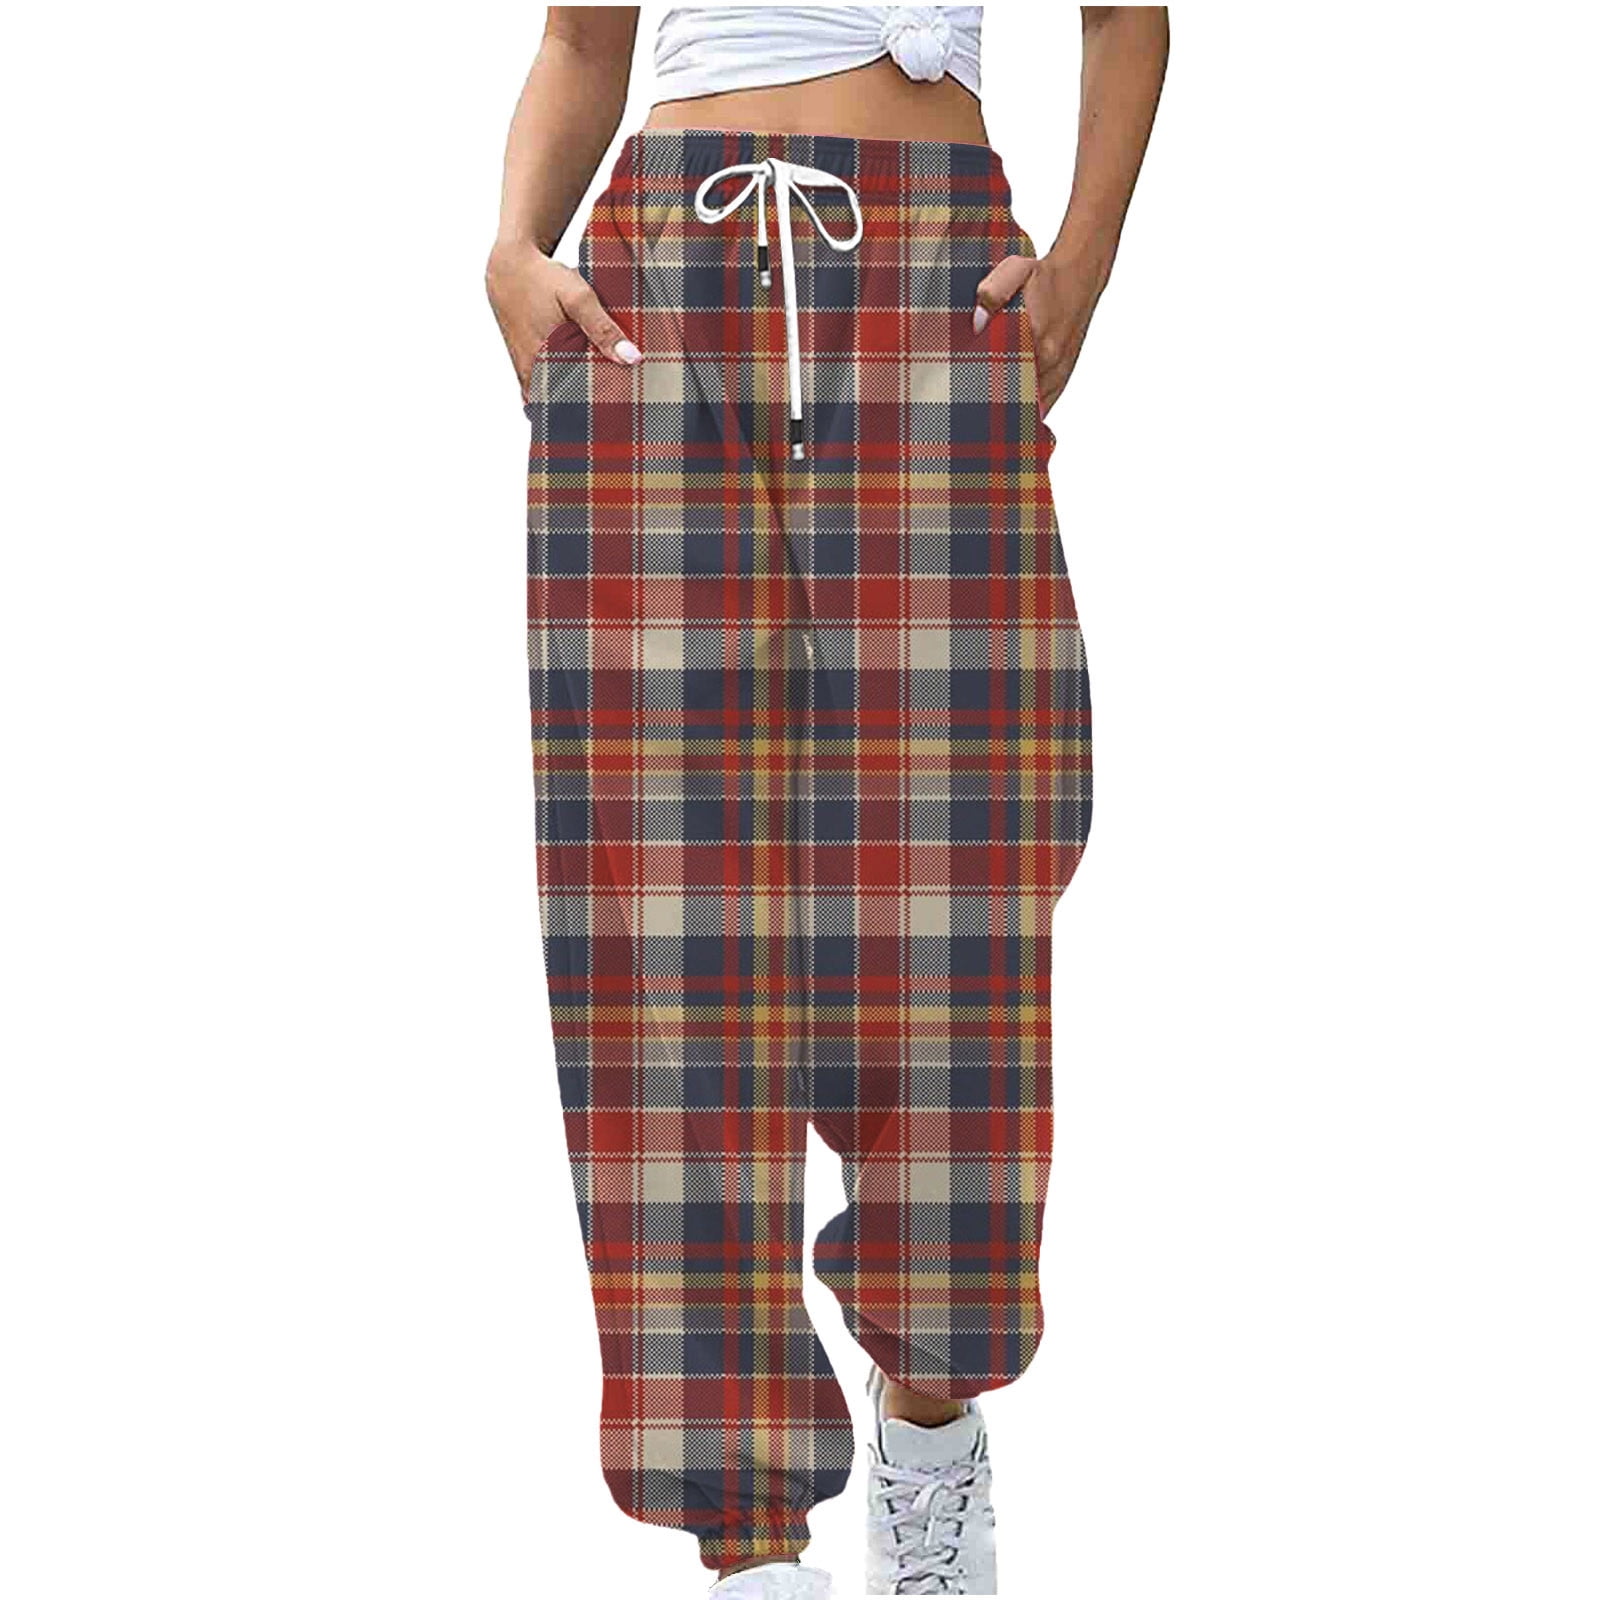 Diufon Women's Plaid Printed Sweatpants with Pocket Athletic Drawstring ...